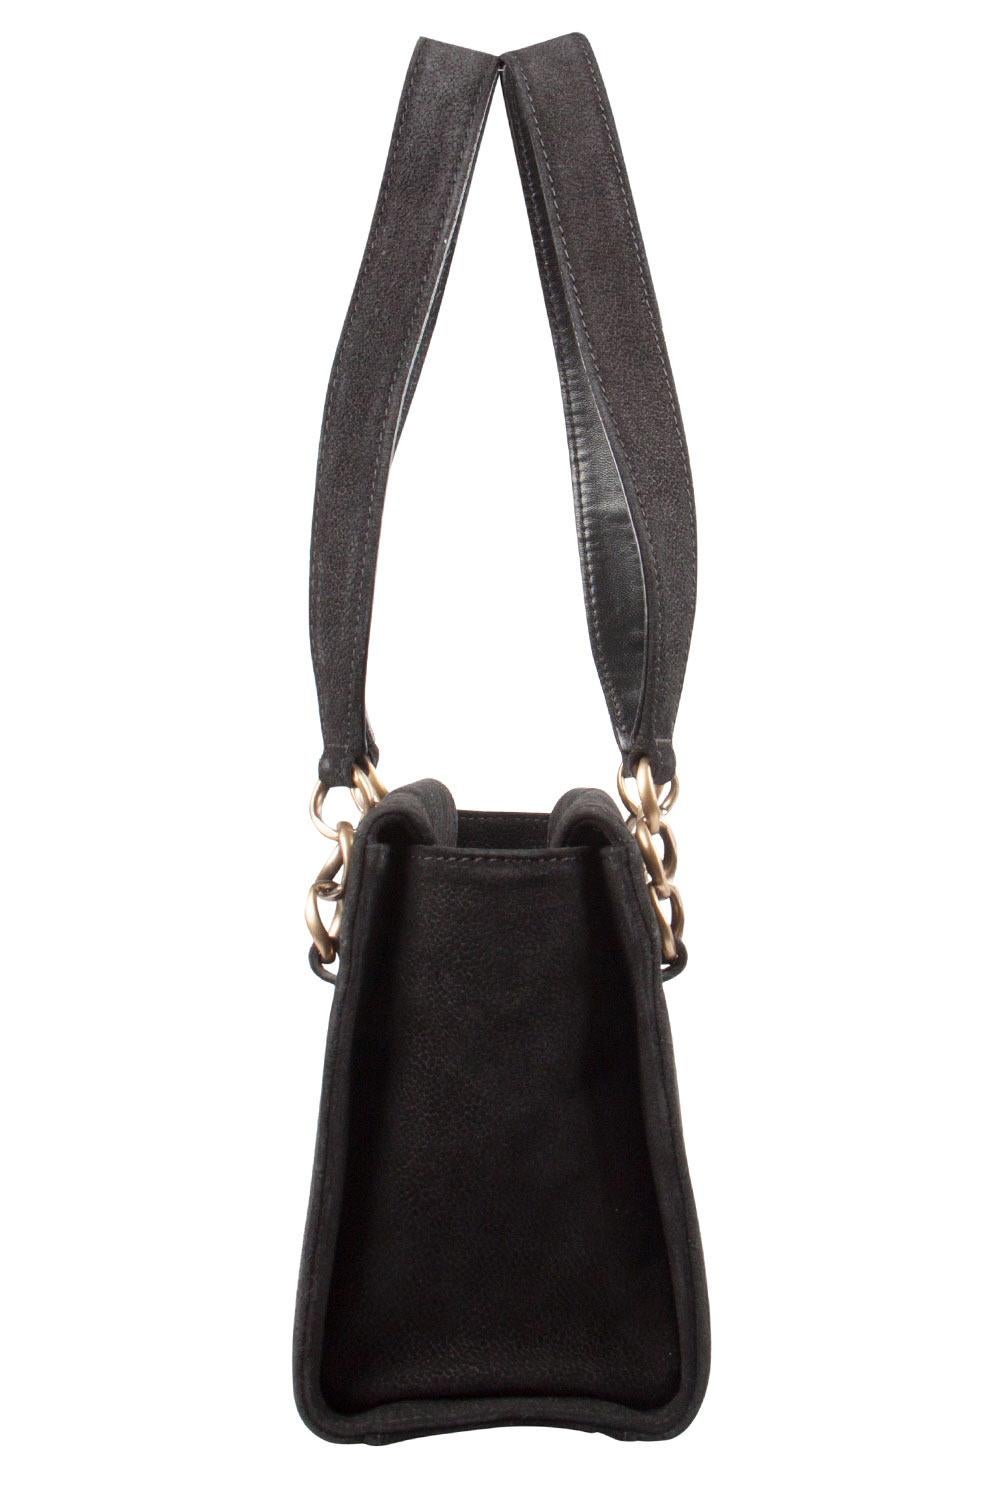 Women's Chanel Black Nubuck Leather Chain Shoulder Bag